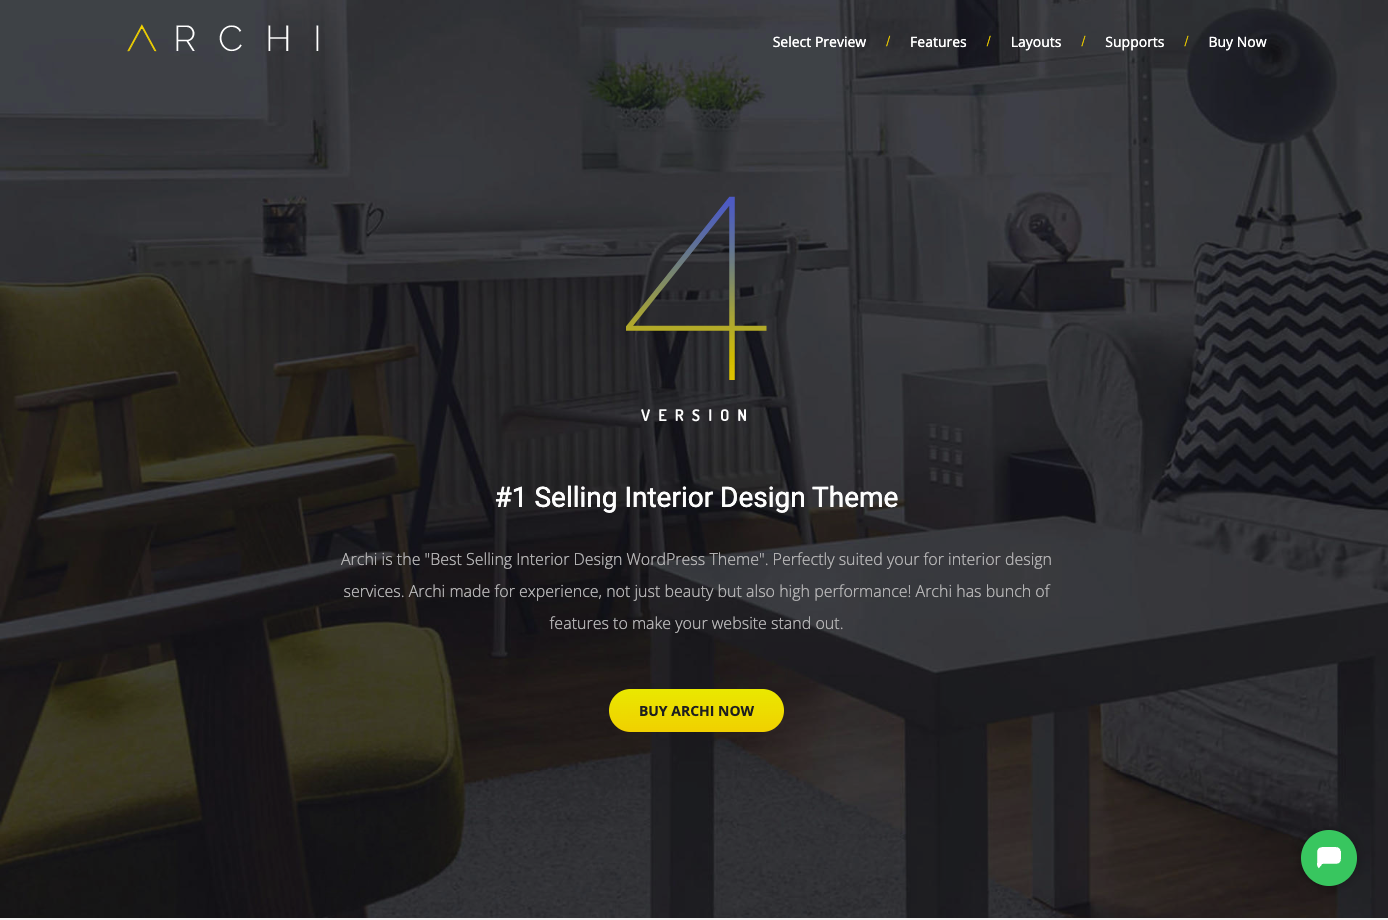 Interior design WordPress theme, Archi